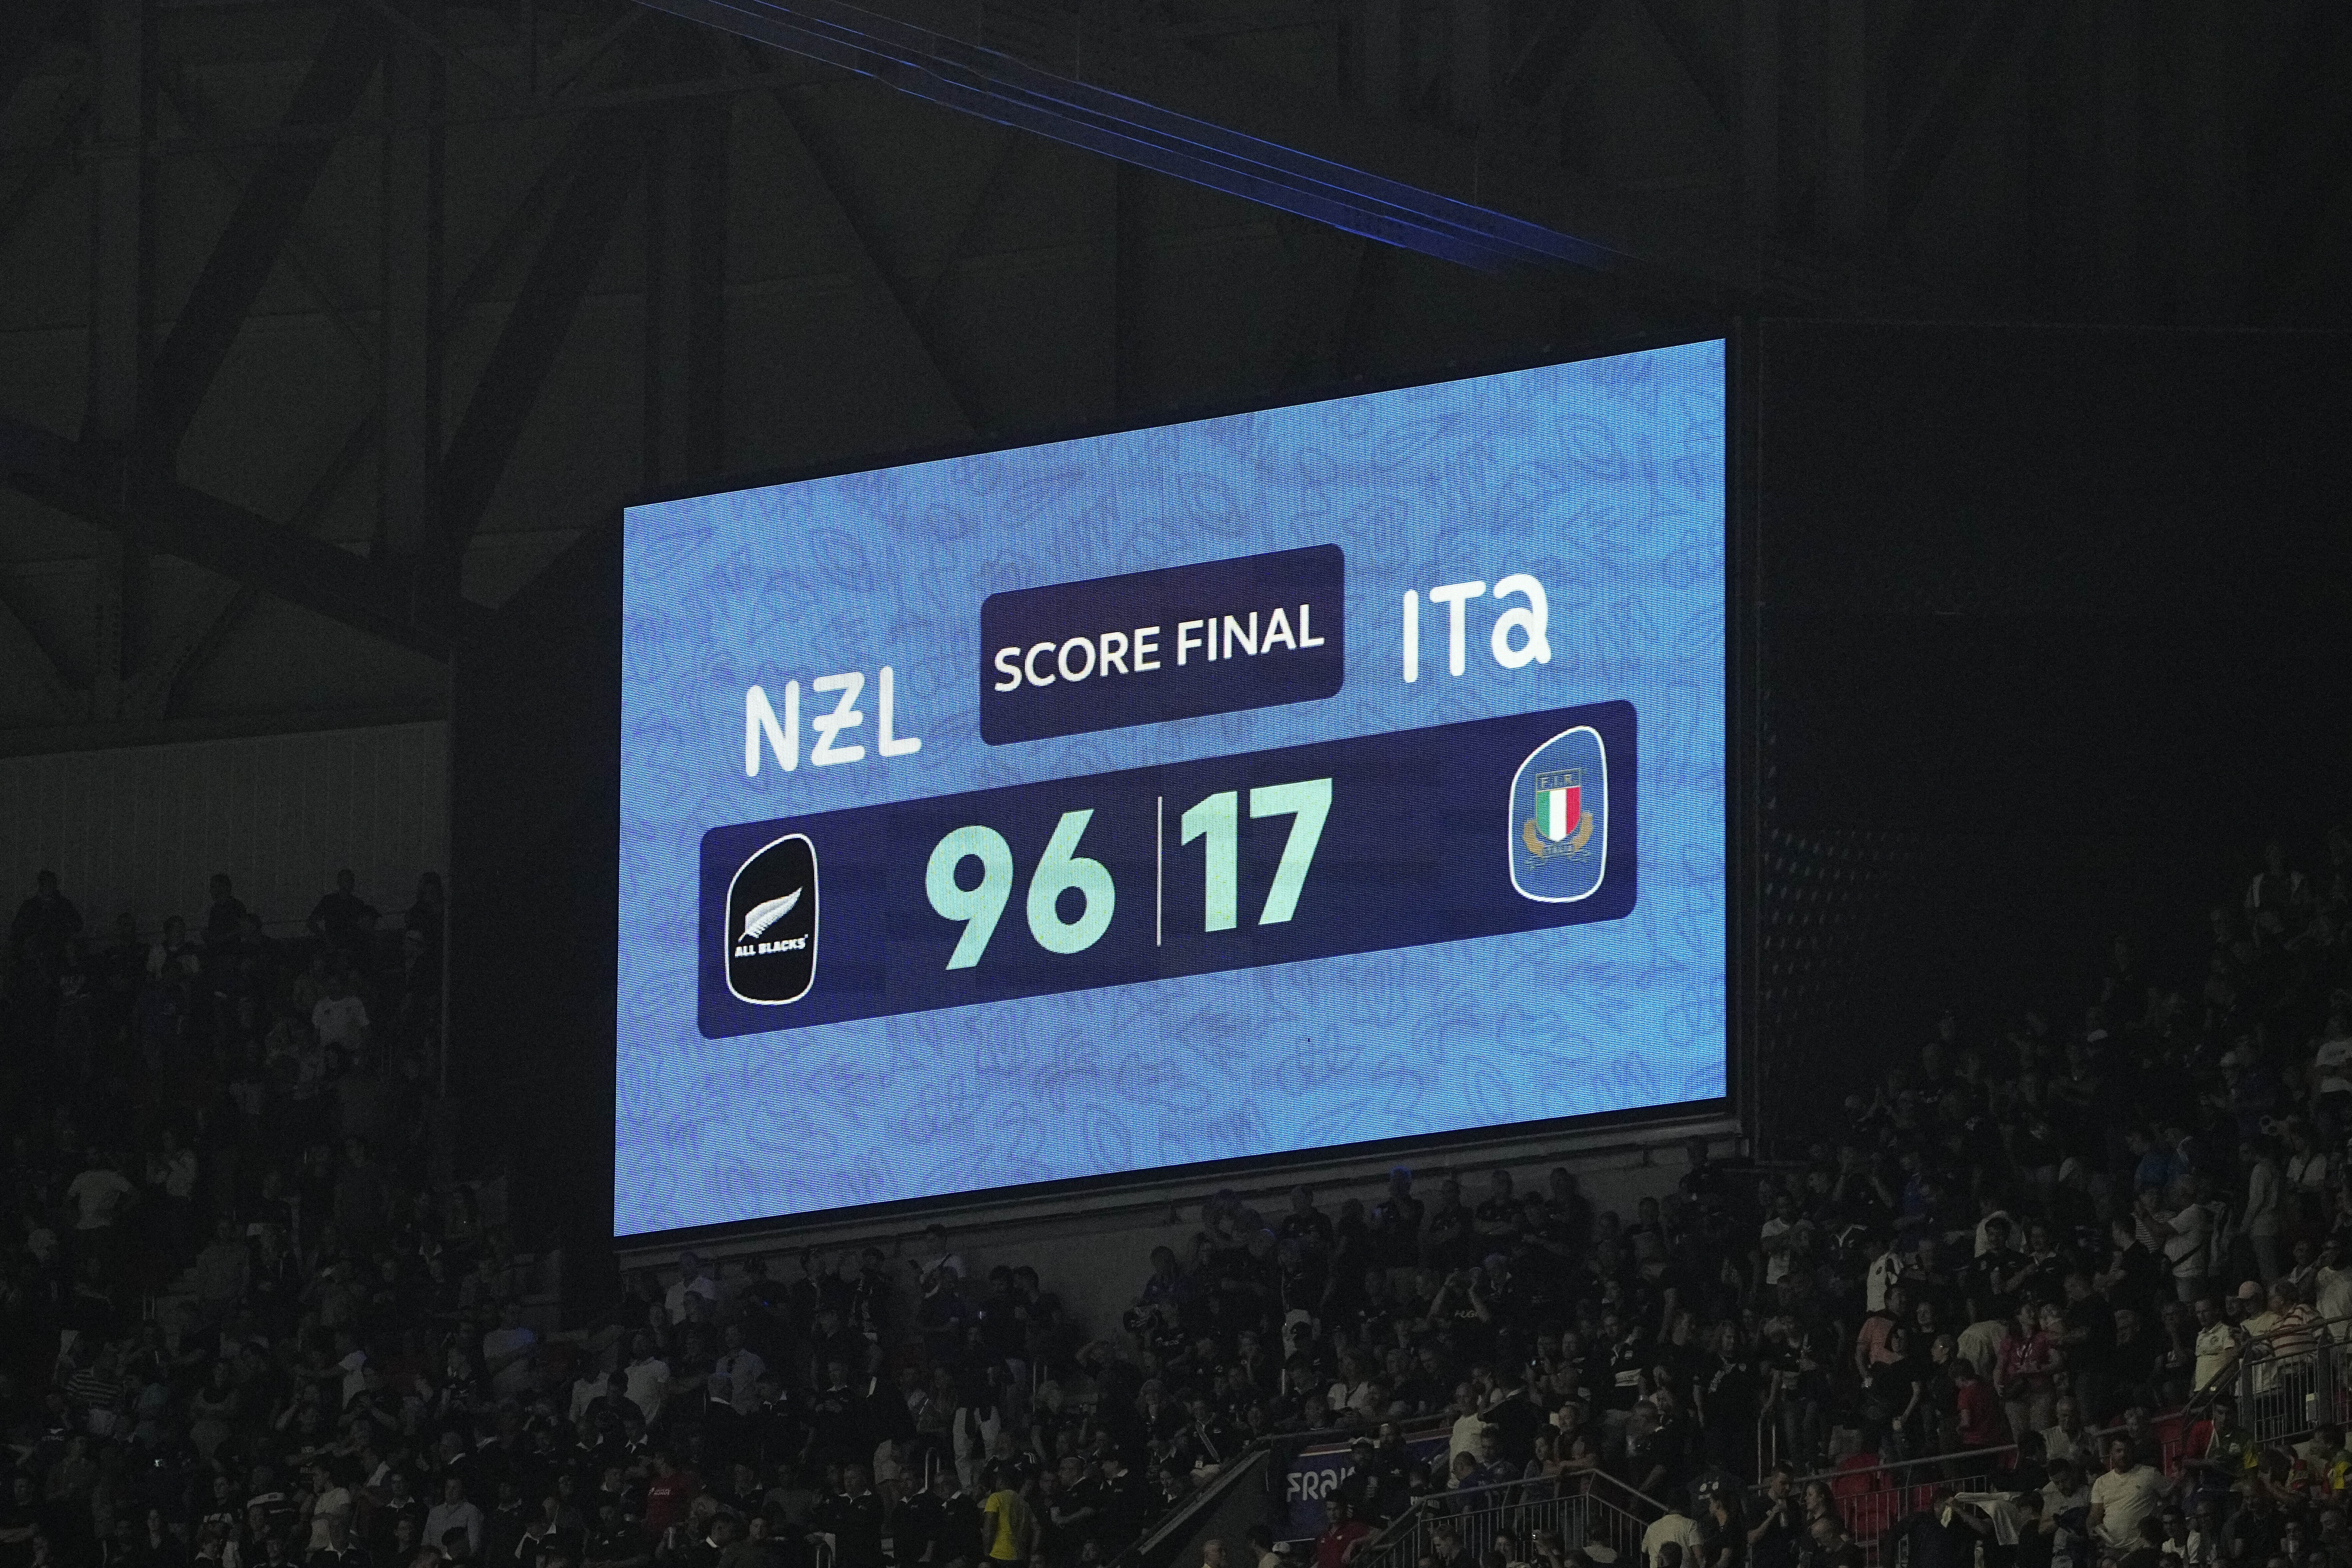 The final score shows on the scoreboard